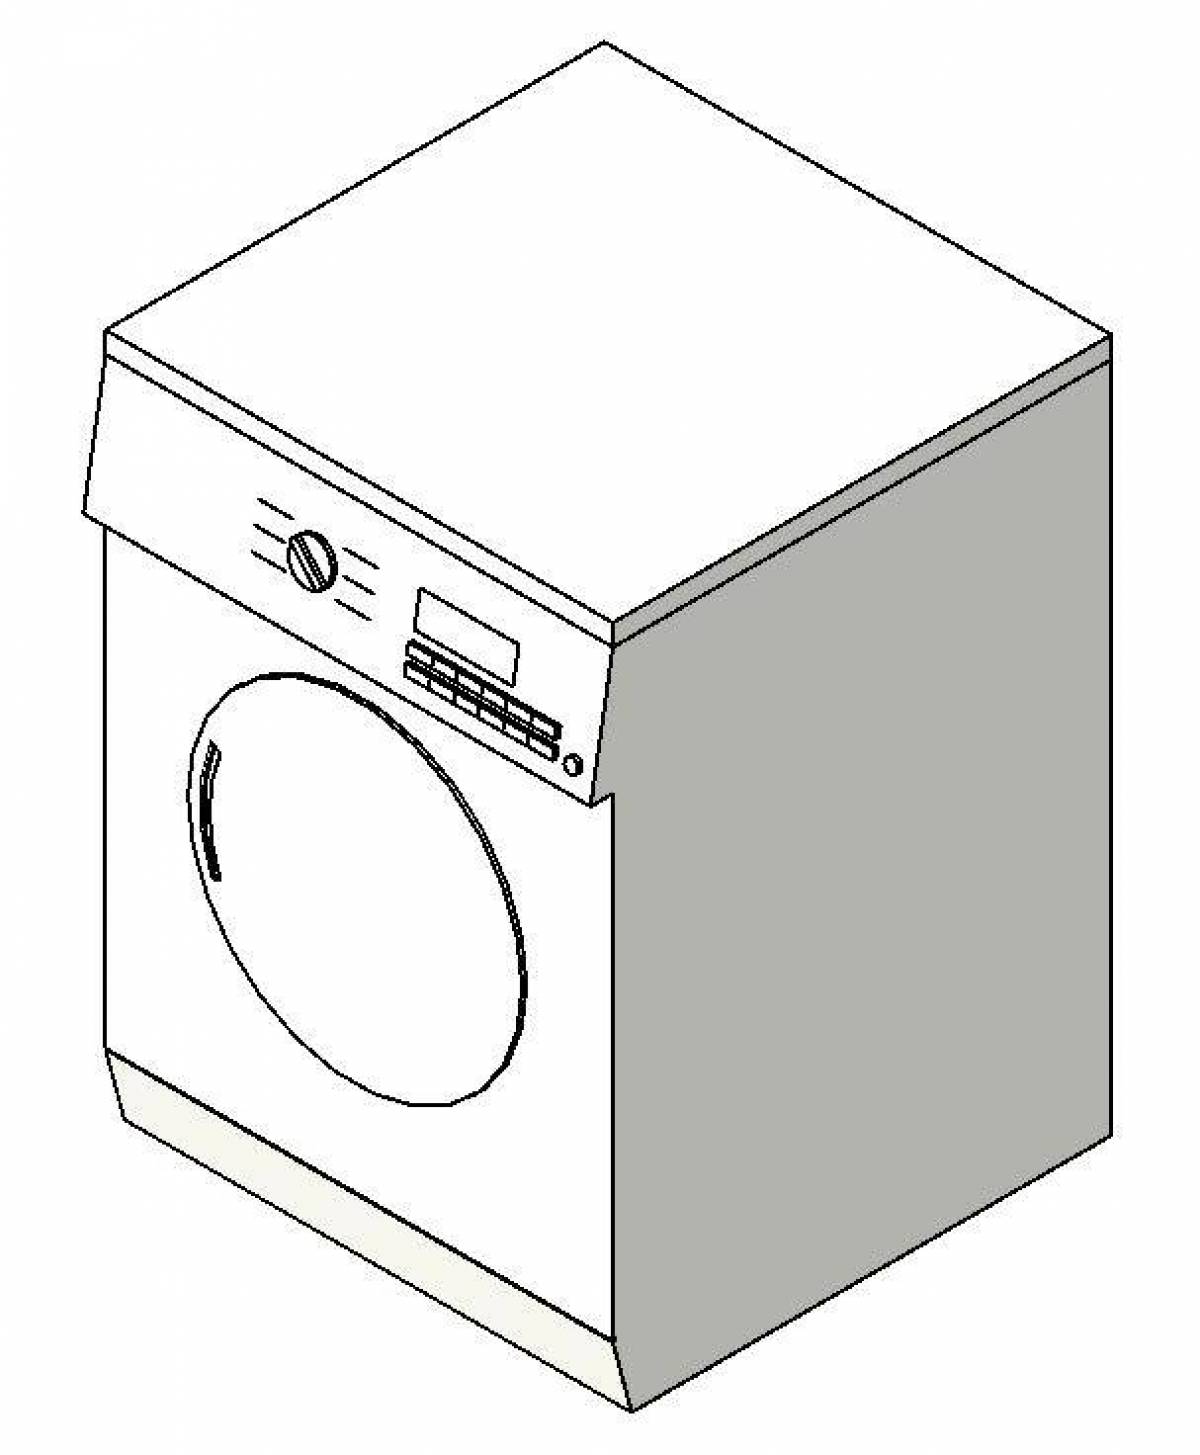 Joyful washing machine coloring page